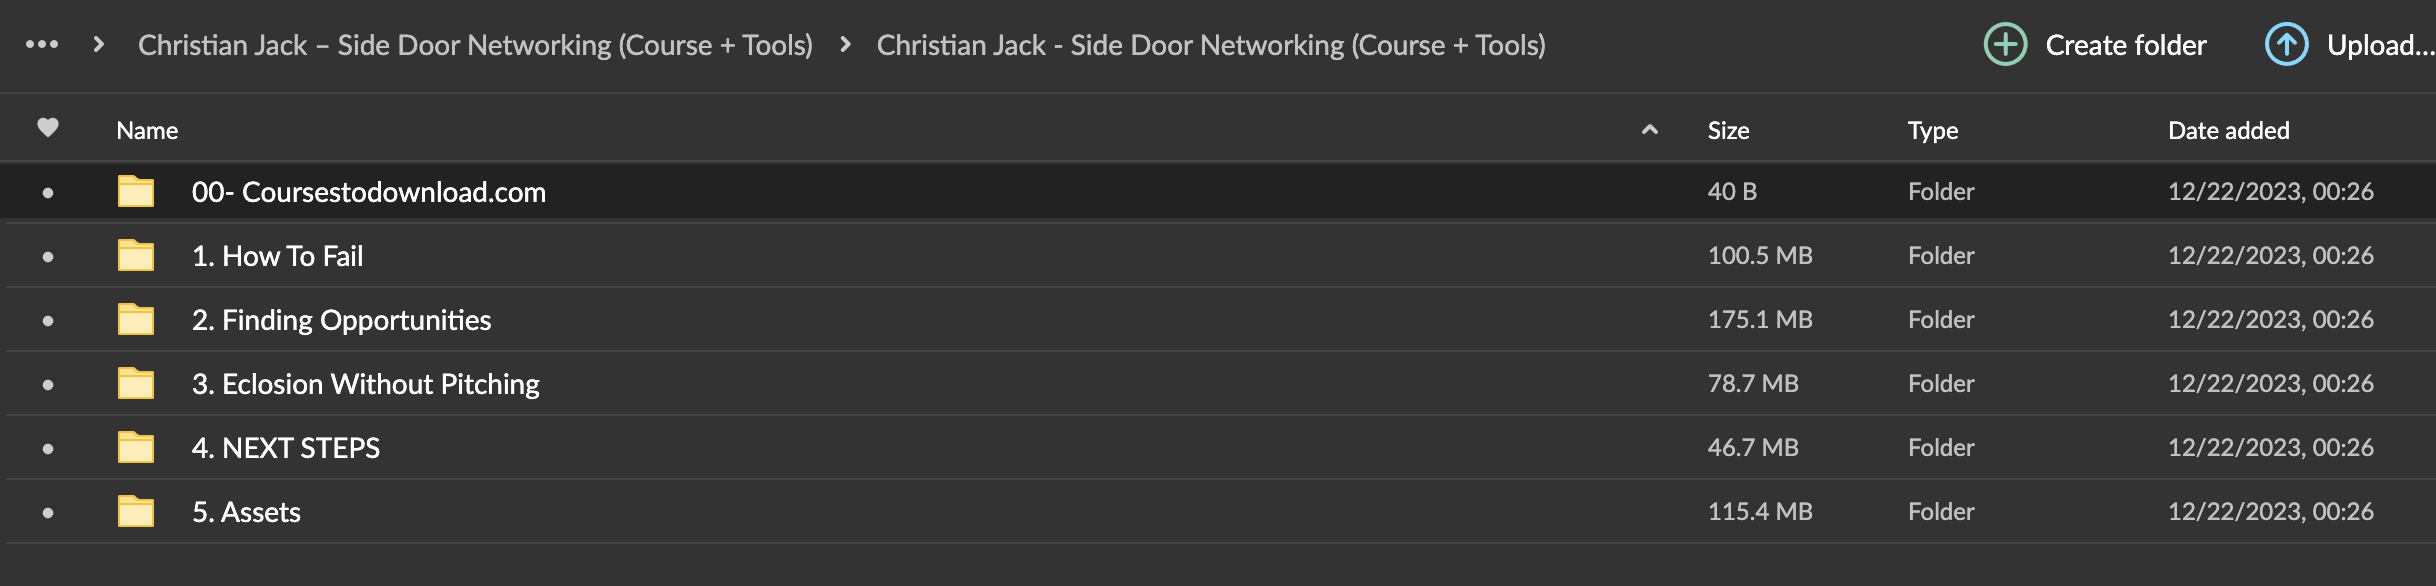 Christian Jack – Side Door Networking (Course + Tools) Download